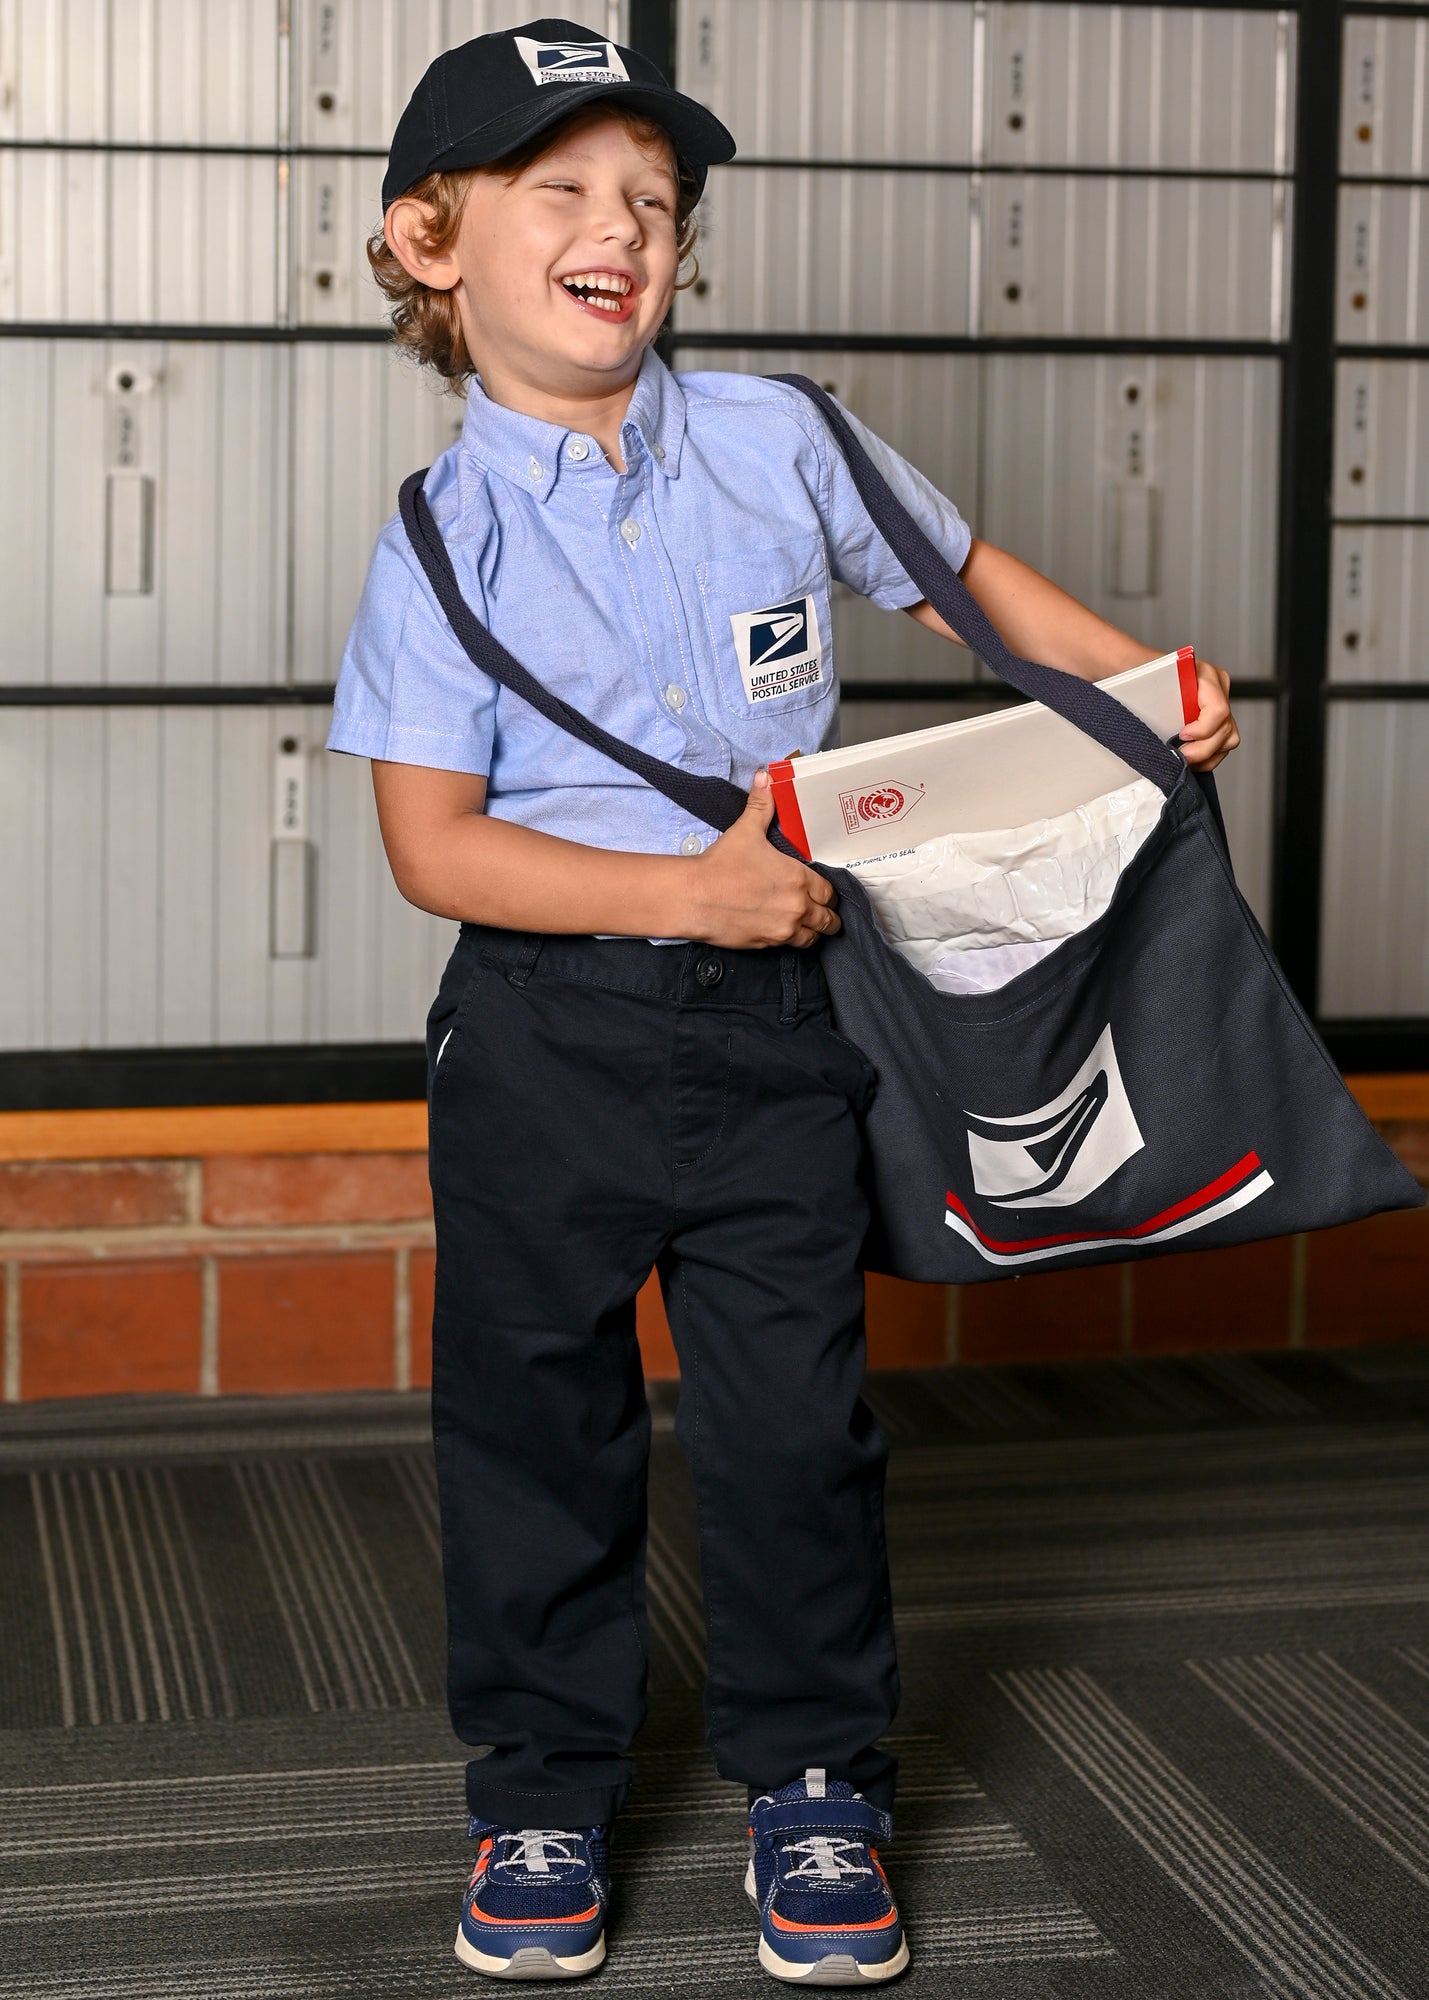 us postman uniform